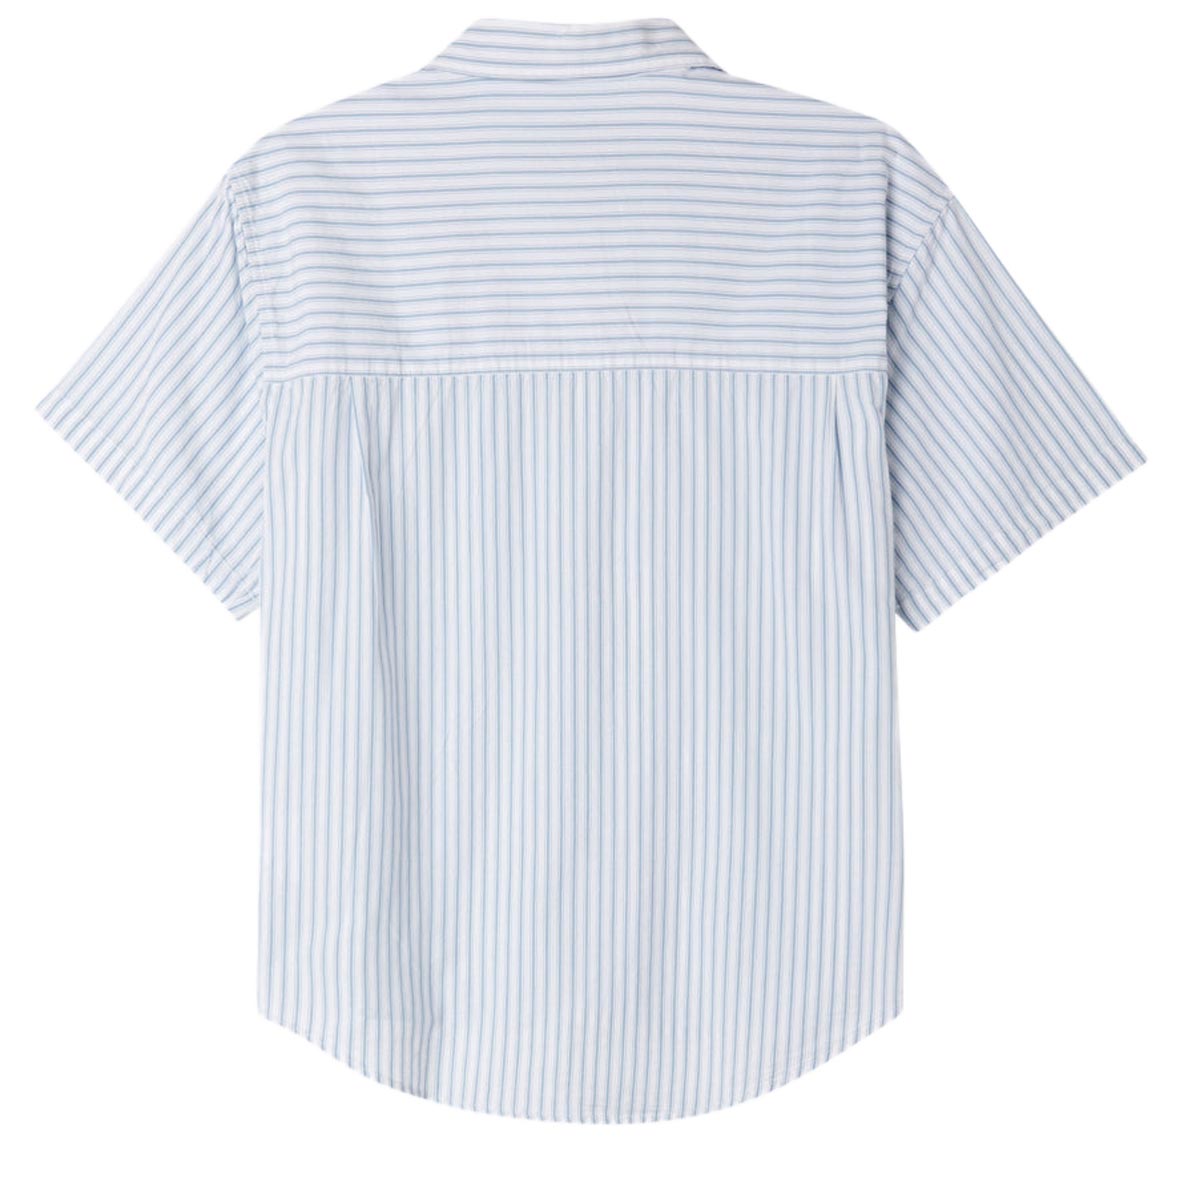 Obey Bigwig Stripe Woven Shirt - Good Grey Multi image 2